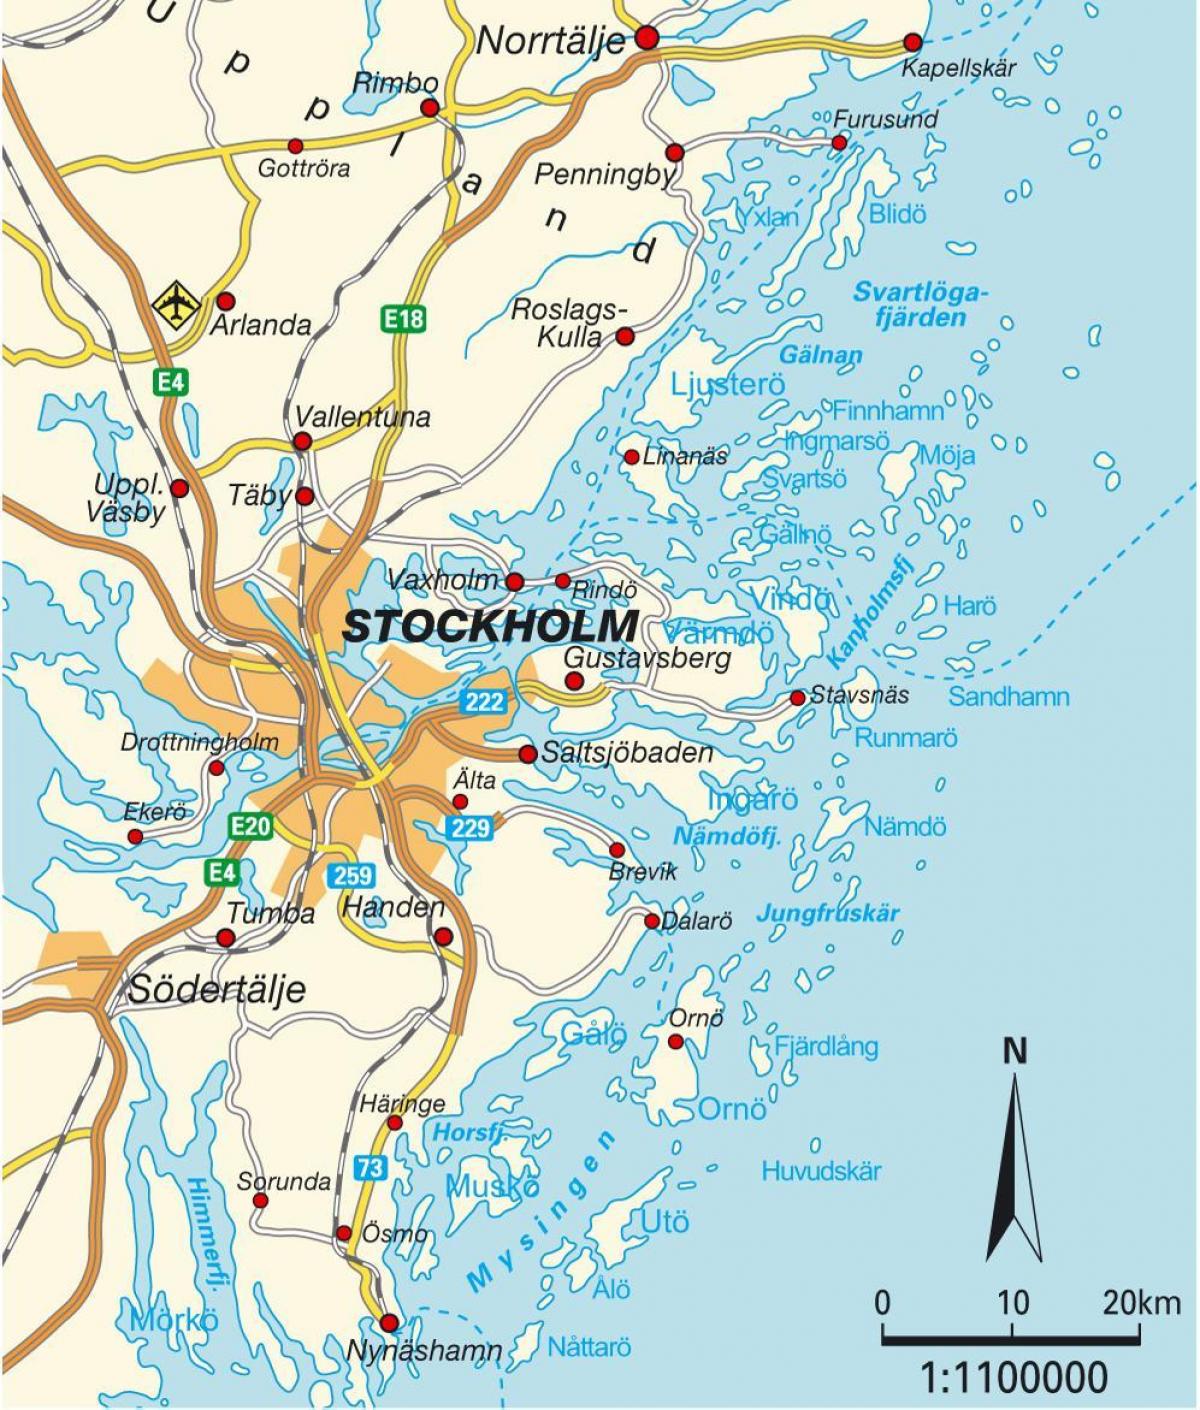 Harita üzerinde Stockholm 